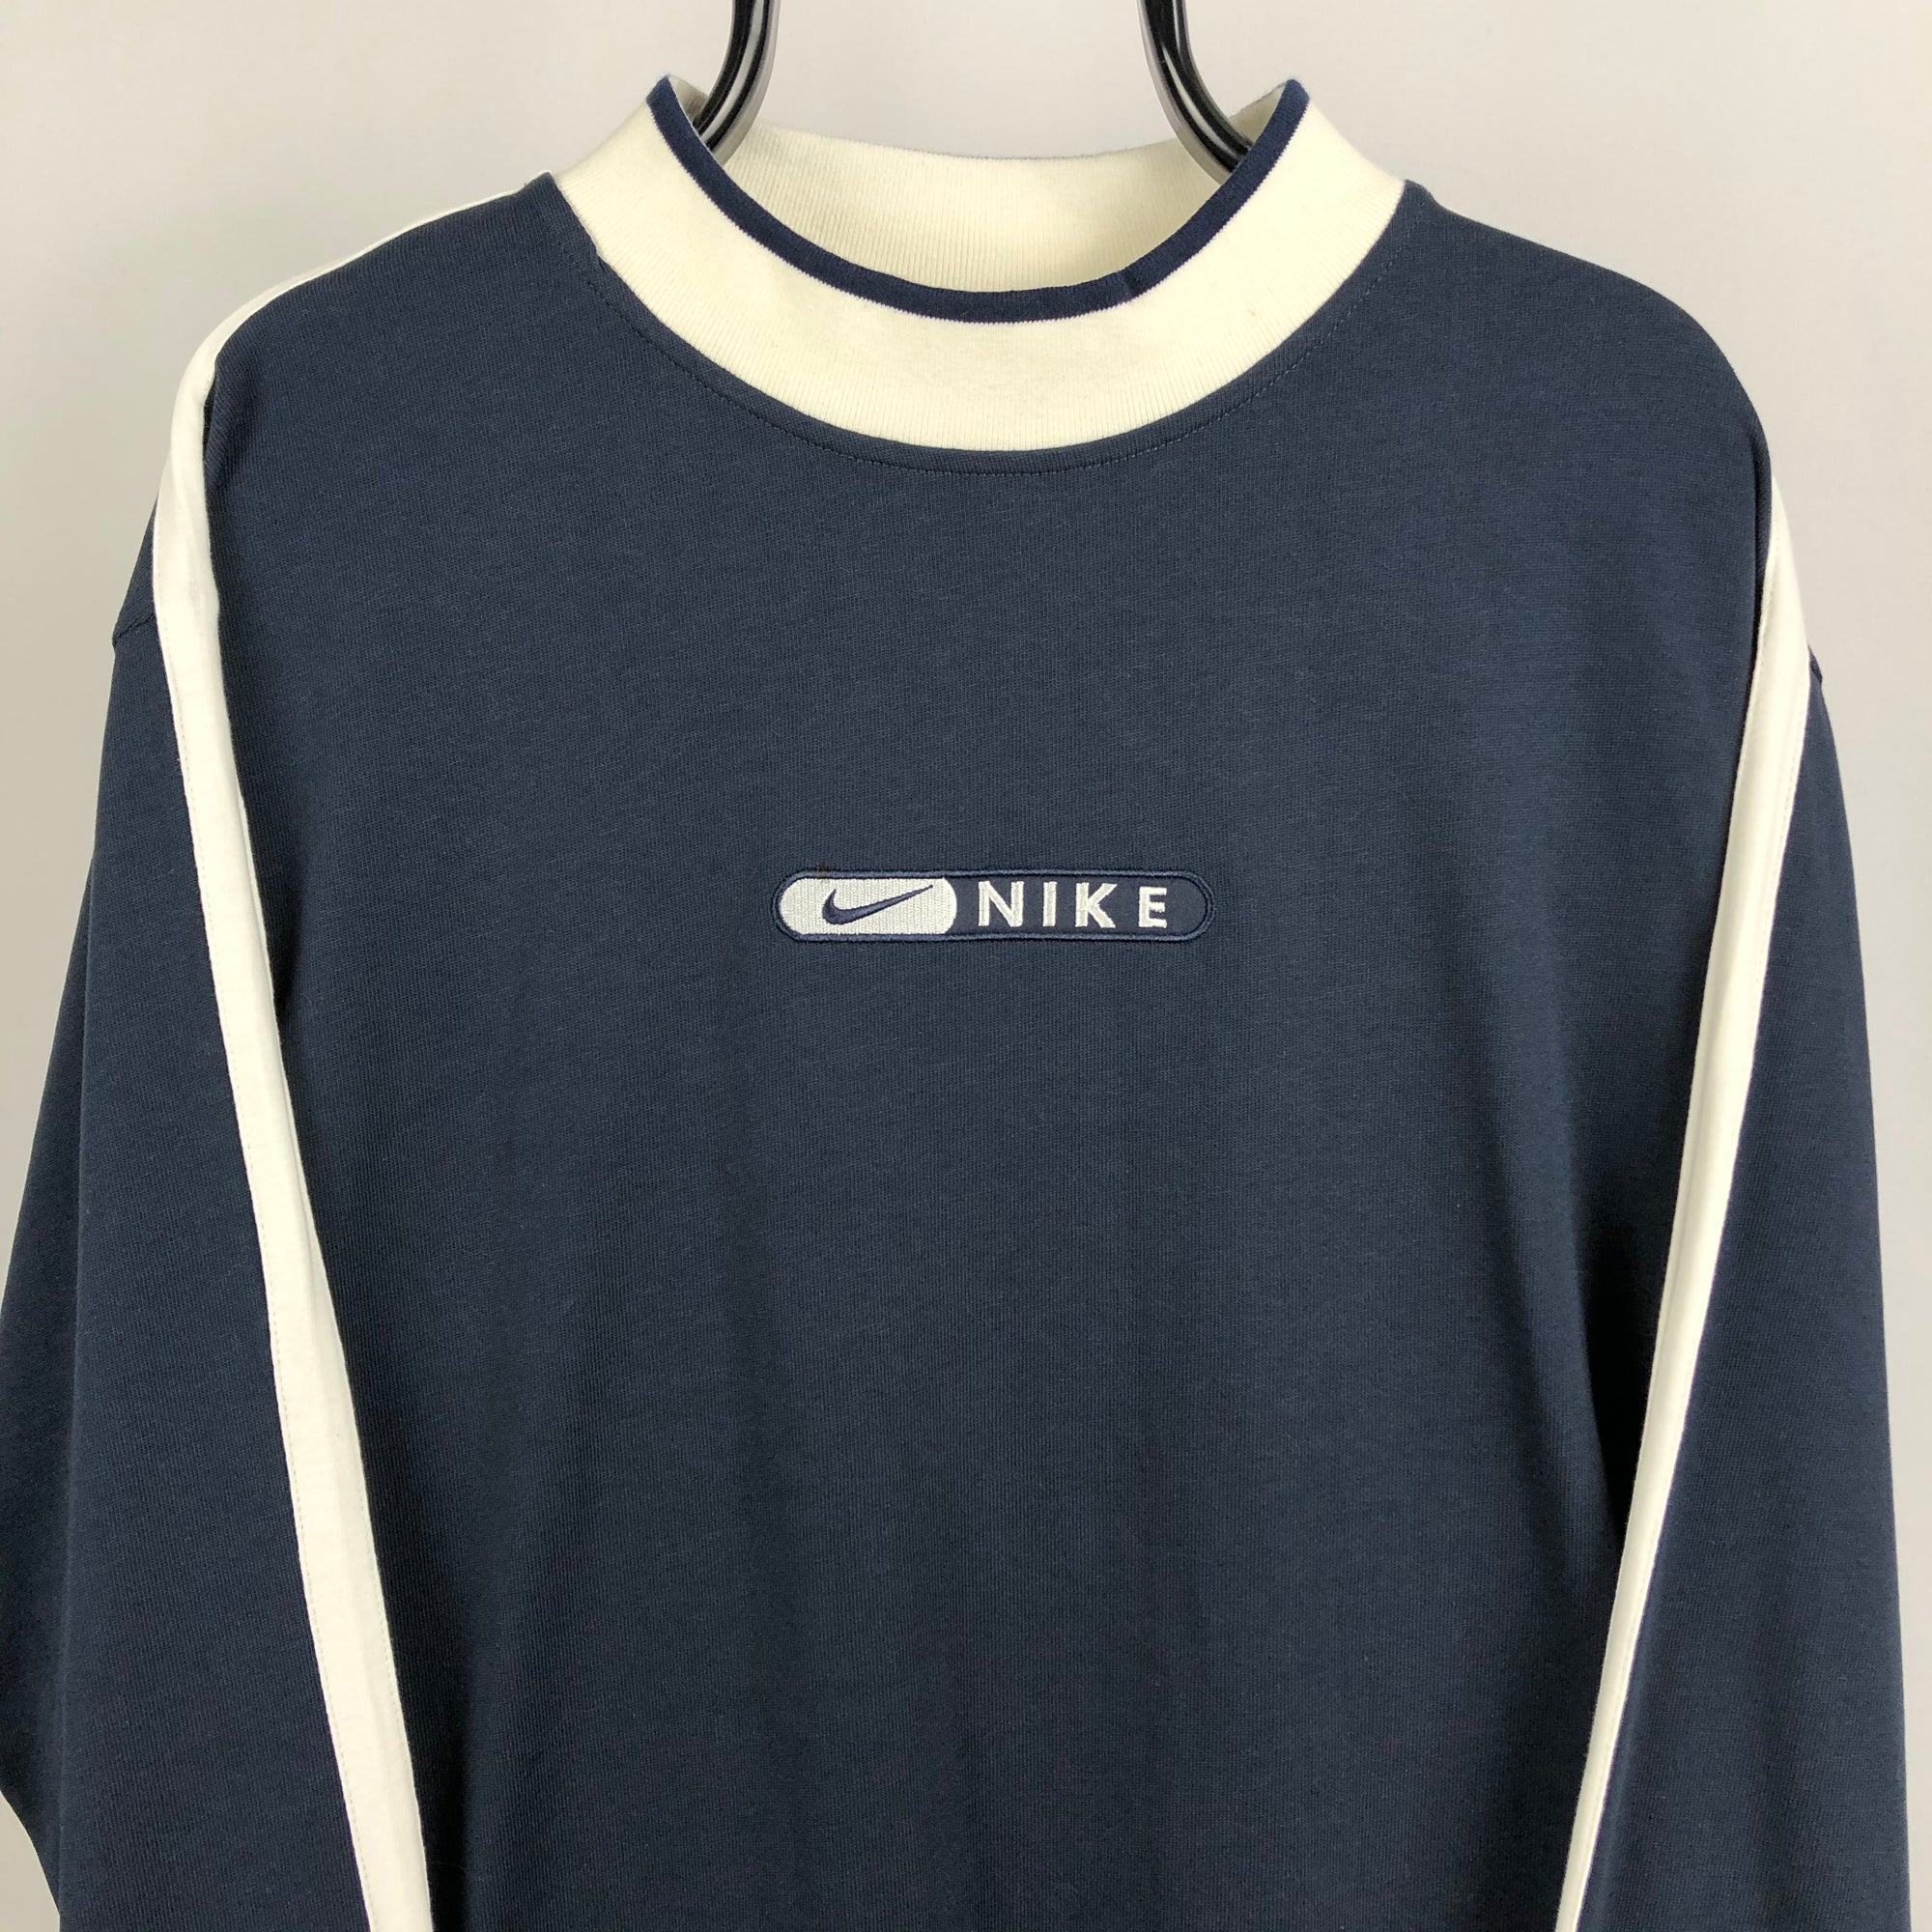 Vintage Nike Small Spellout Sweatshirt in Navy/White - Men's Large/Women's XL